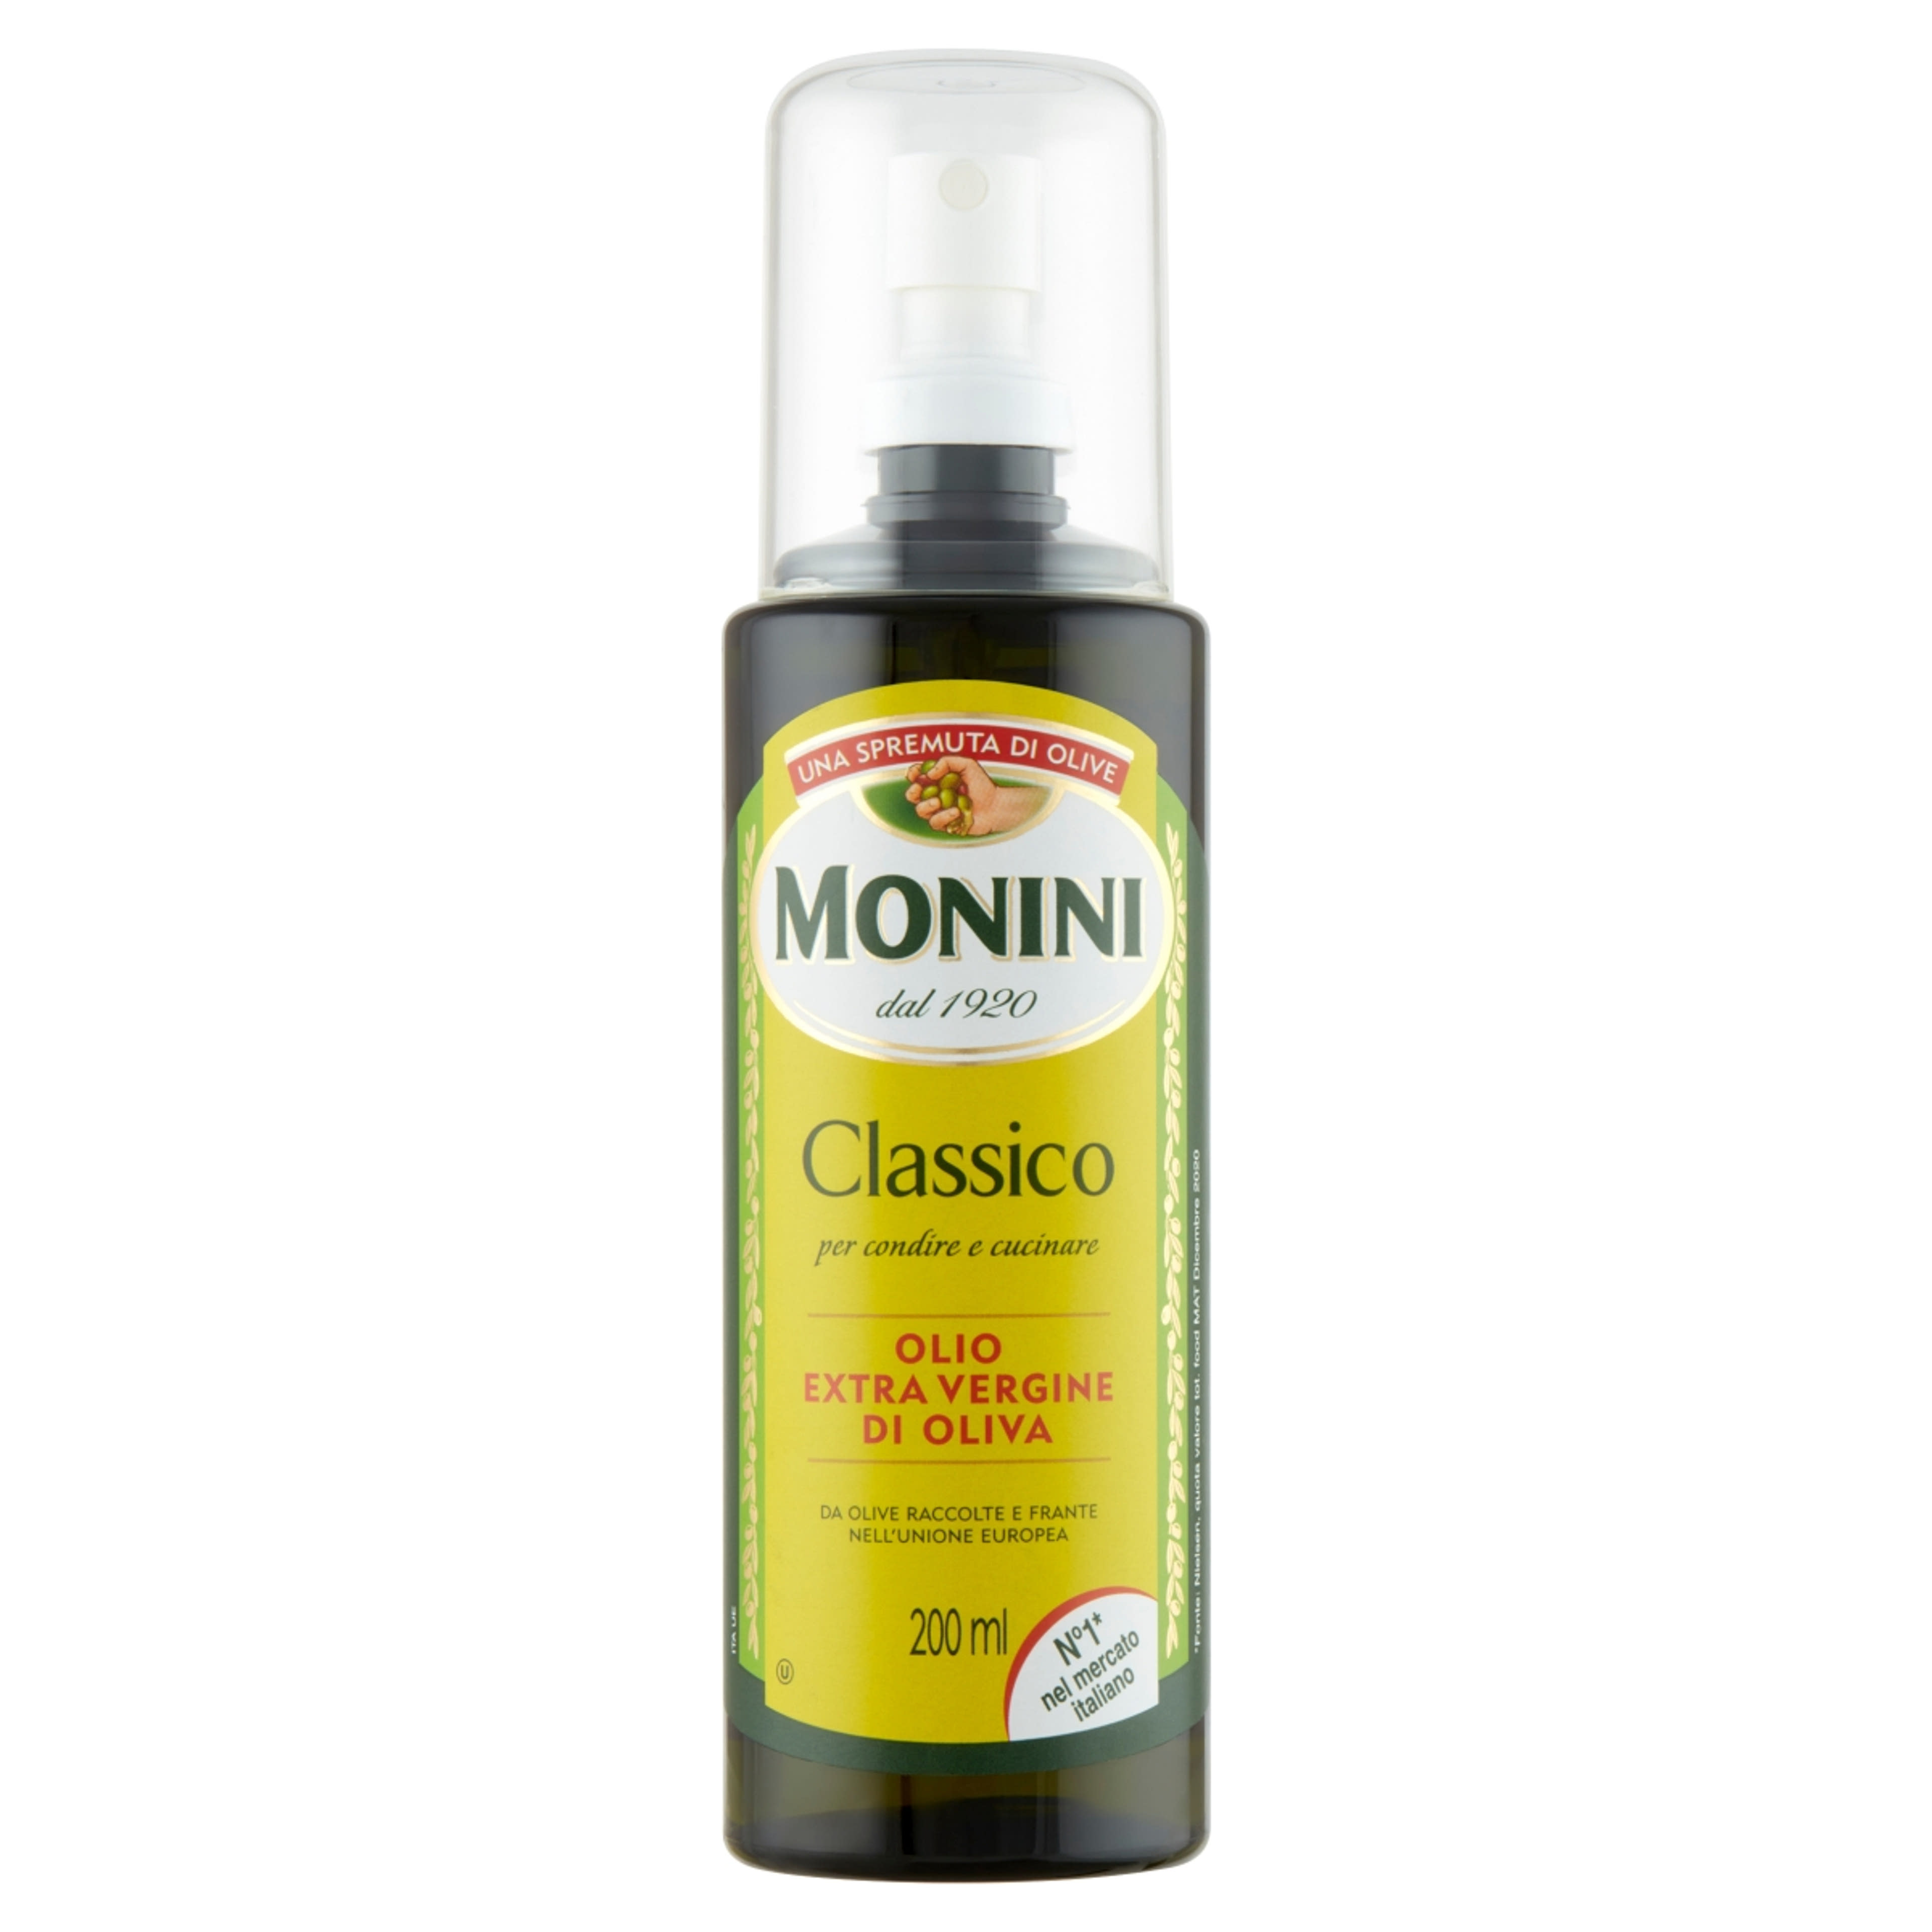 Monini classico extra szűz olivaolaj spray - 200 ml